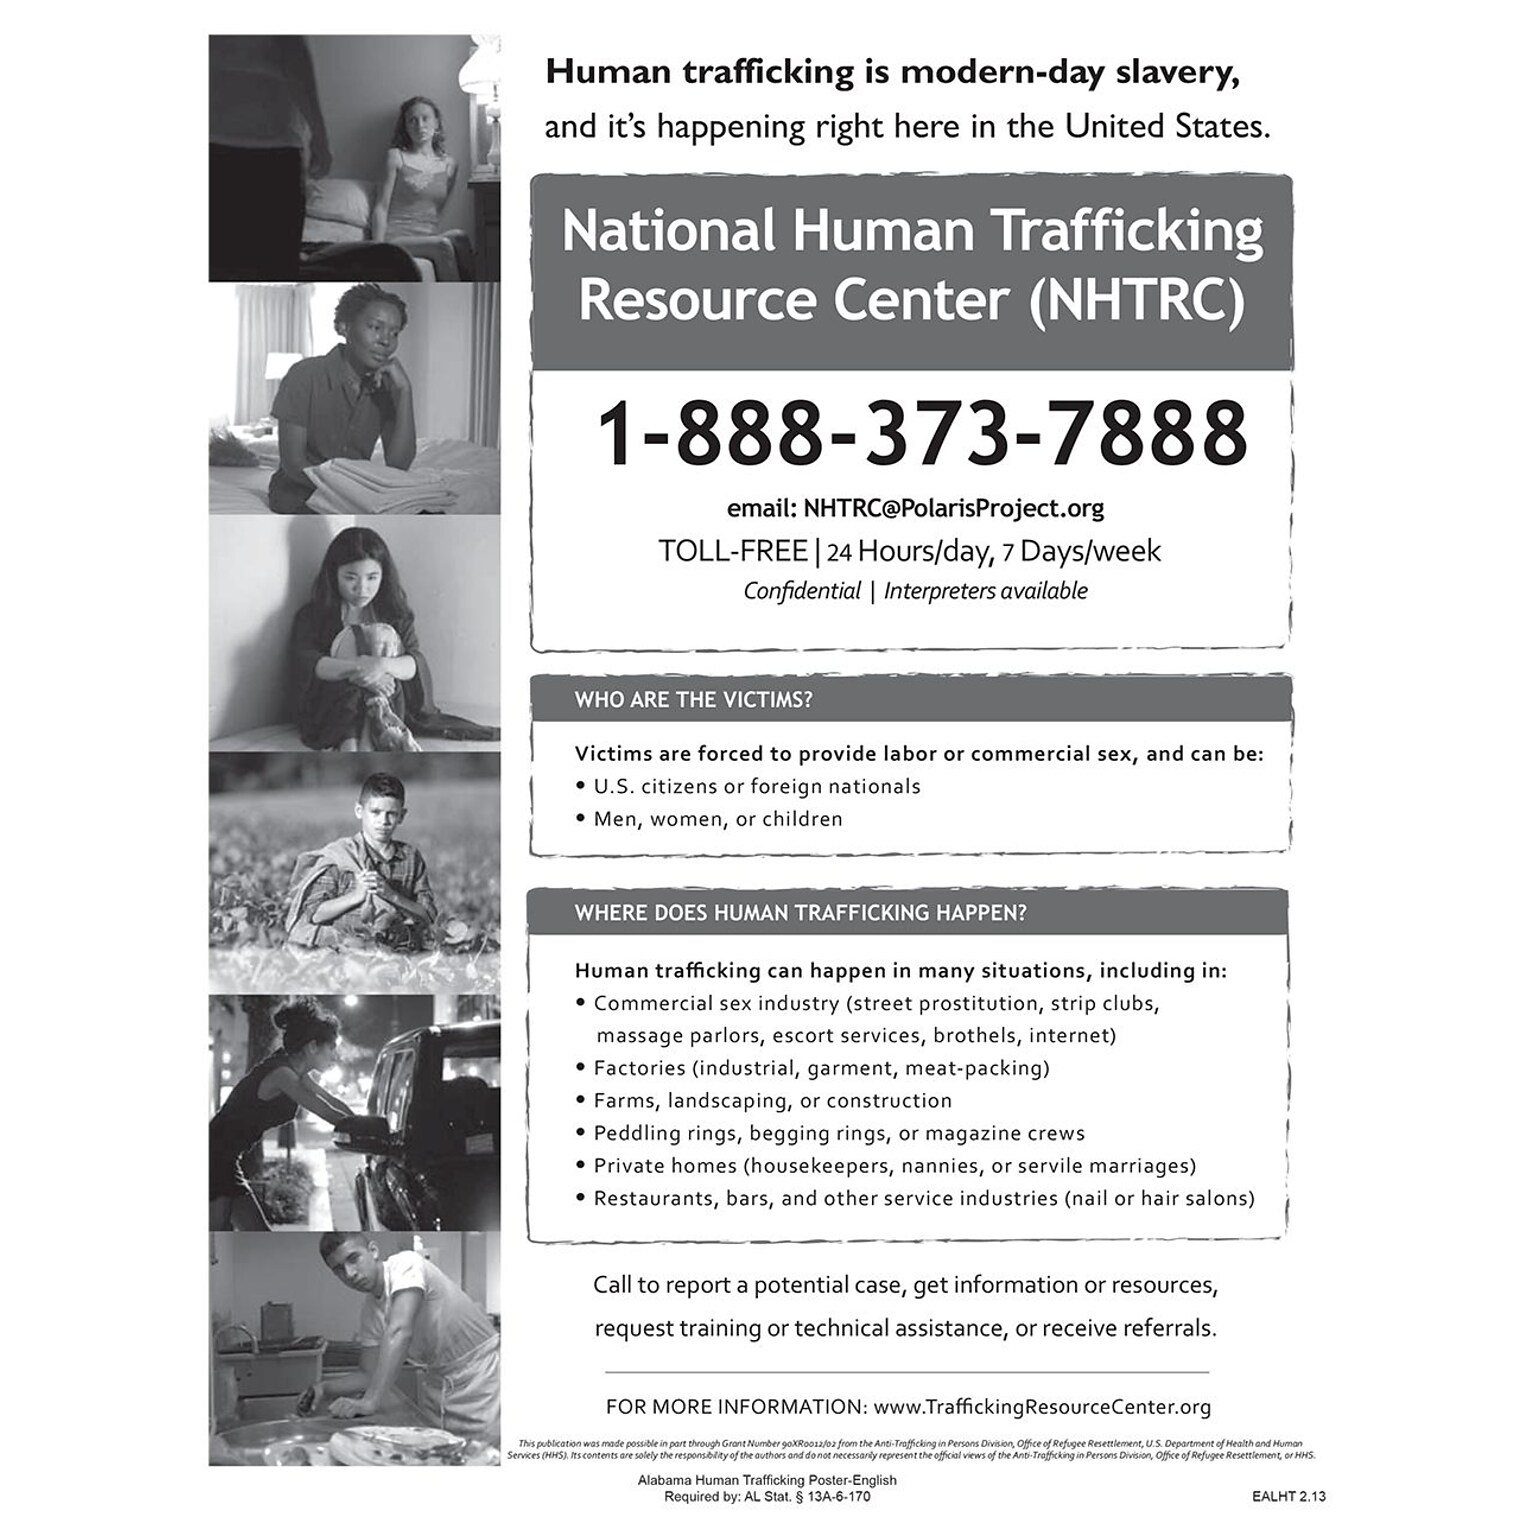 ComplyRight™ Alabama Human Trafficking English Poster (EALHT)